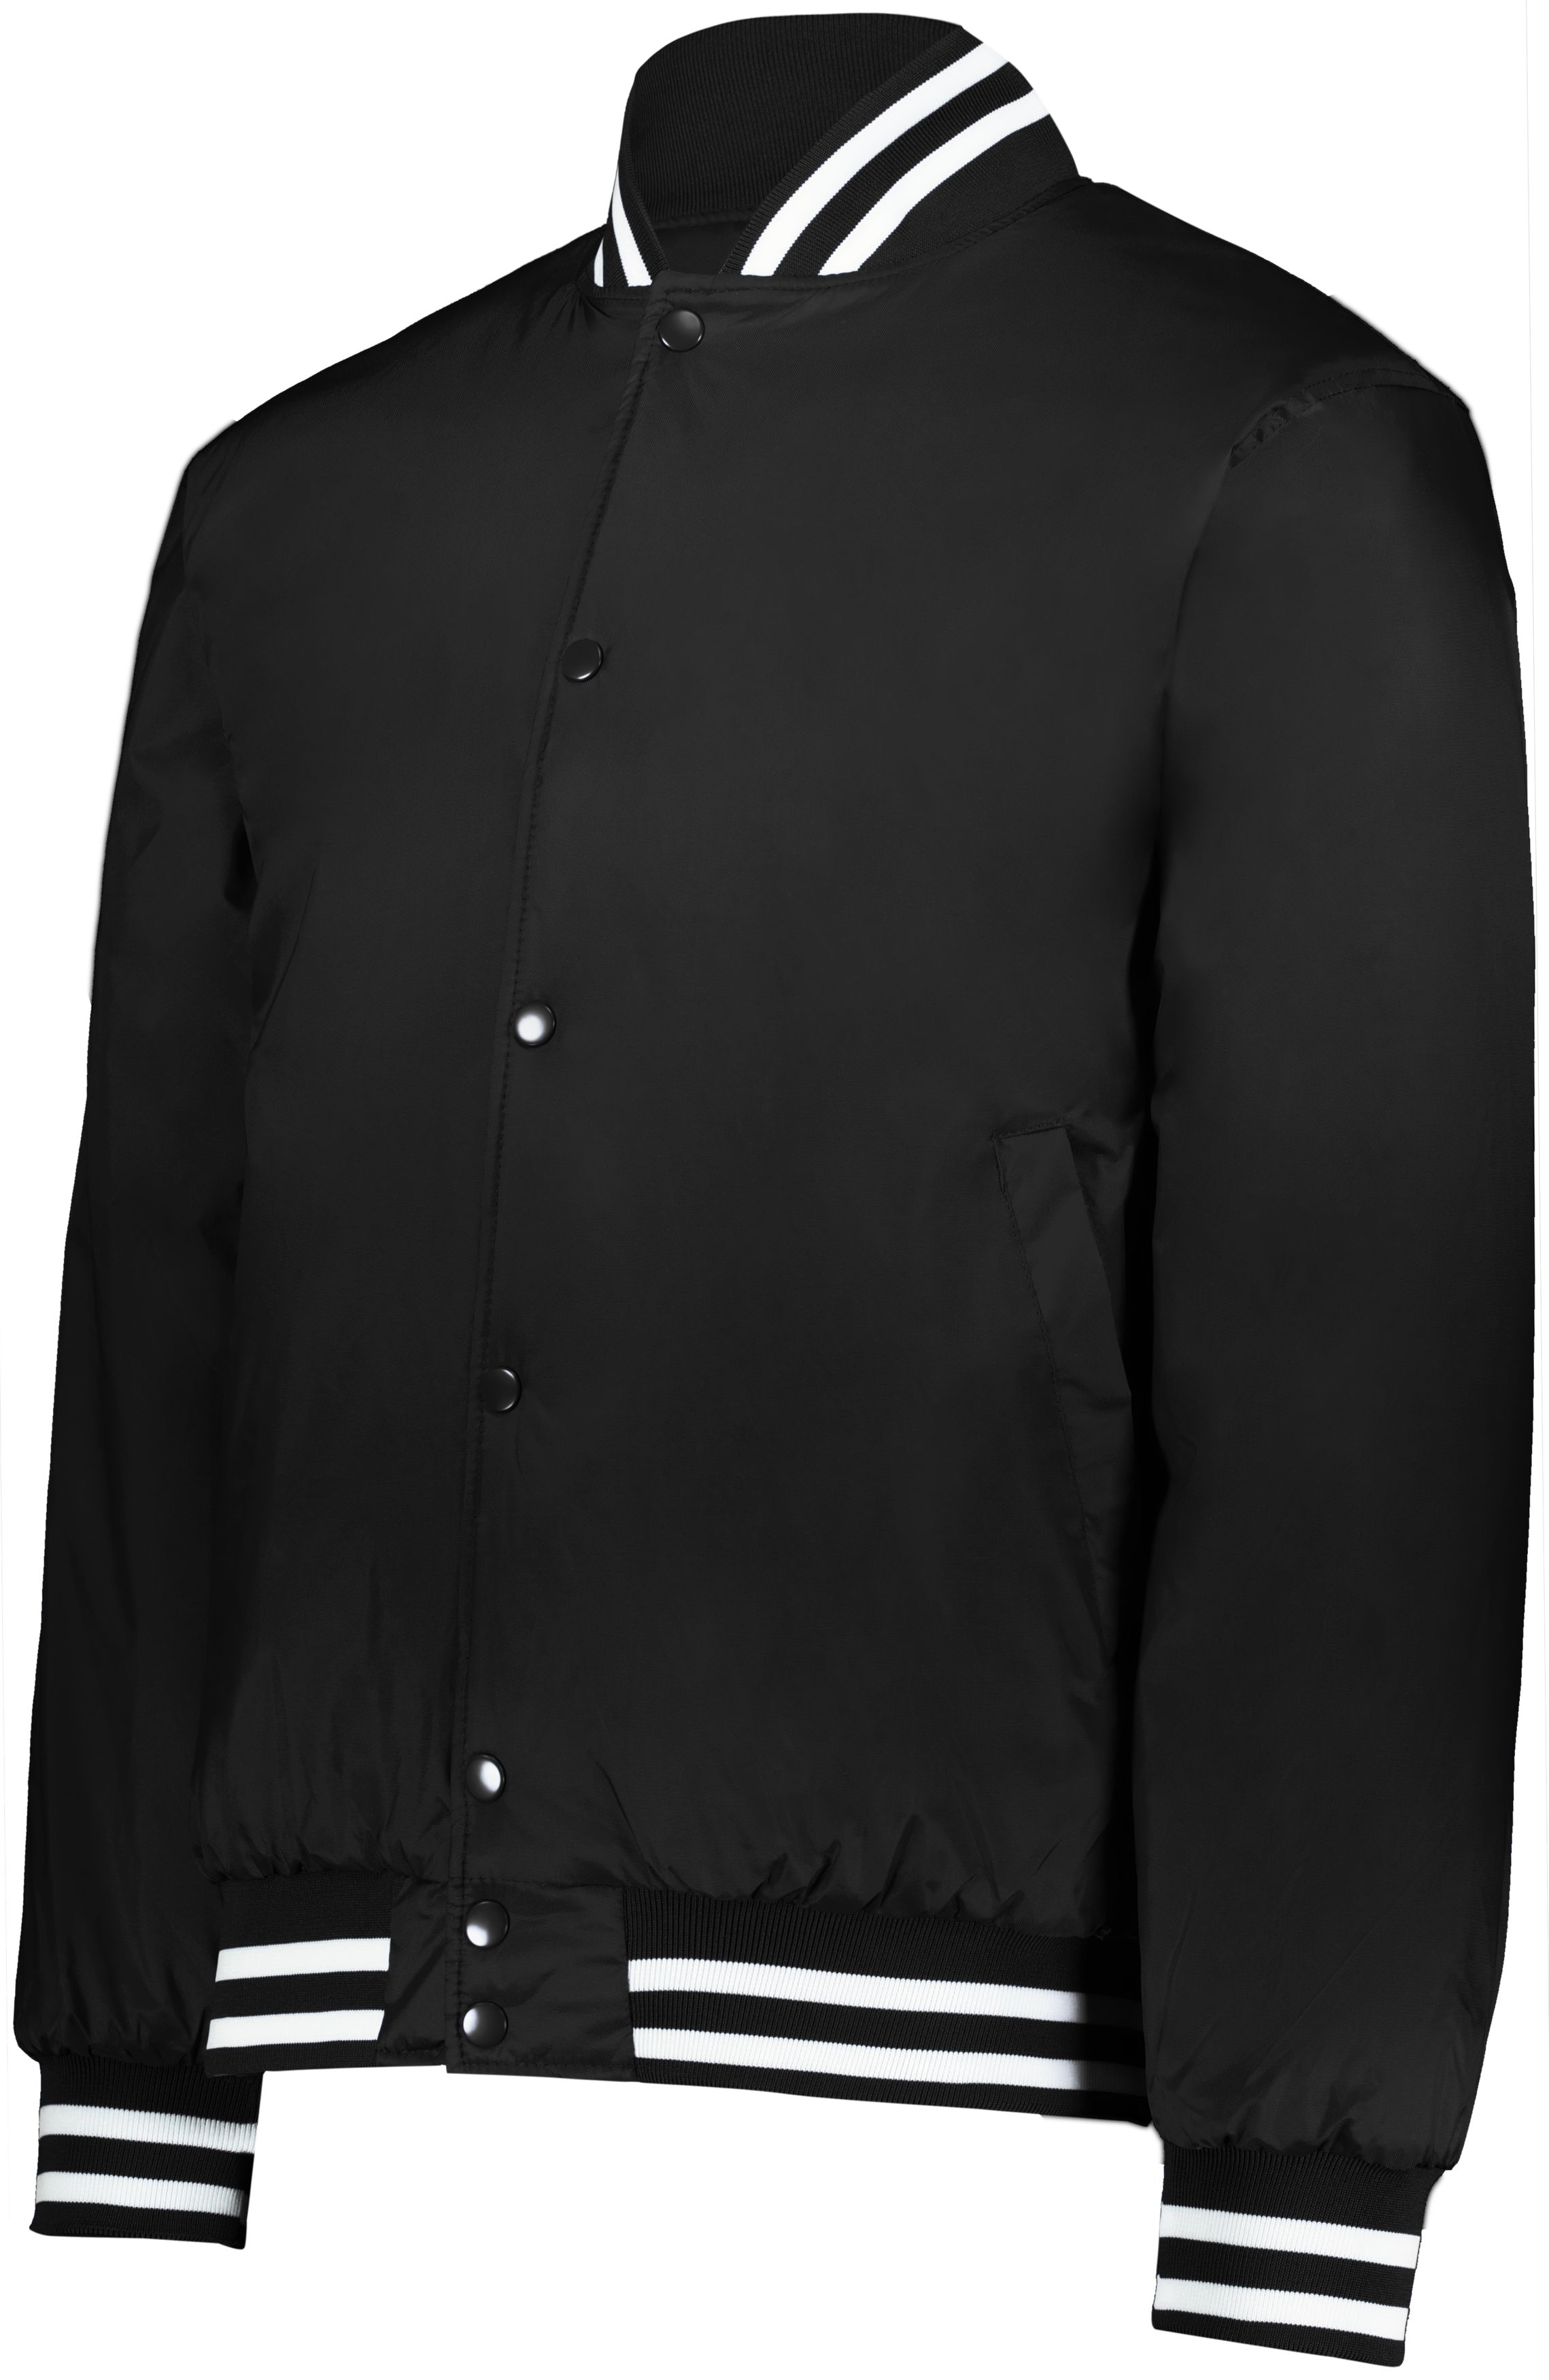 Holloway Sportswear L Heritage Jacket Black/White 229140 - image 1 of 4